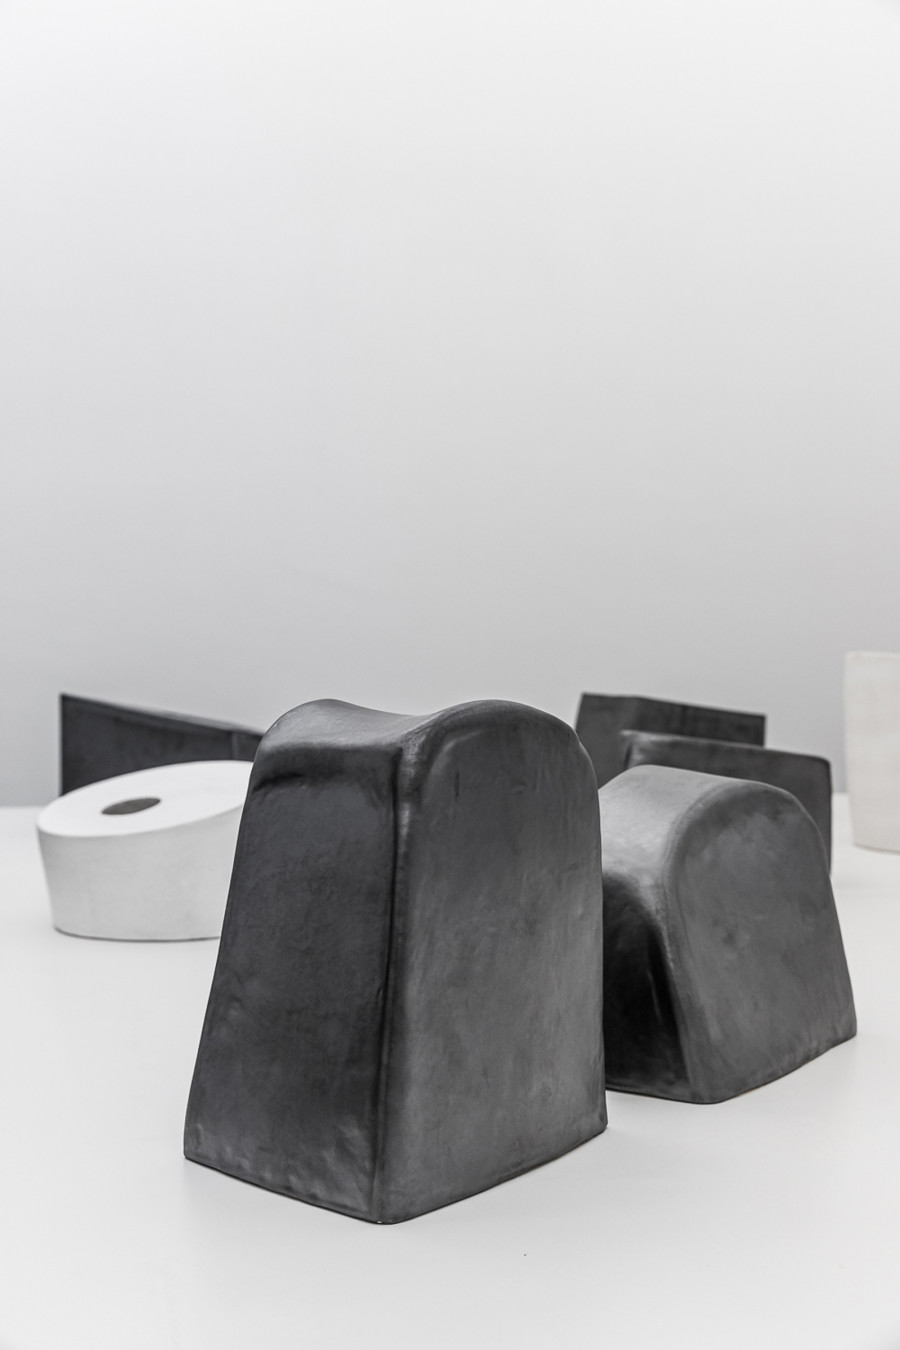 Sébastien de Ganay «Still» Ausstellungsansicht Häusler Contemporary, 2020 | Foto: Peter Baracchi